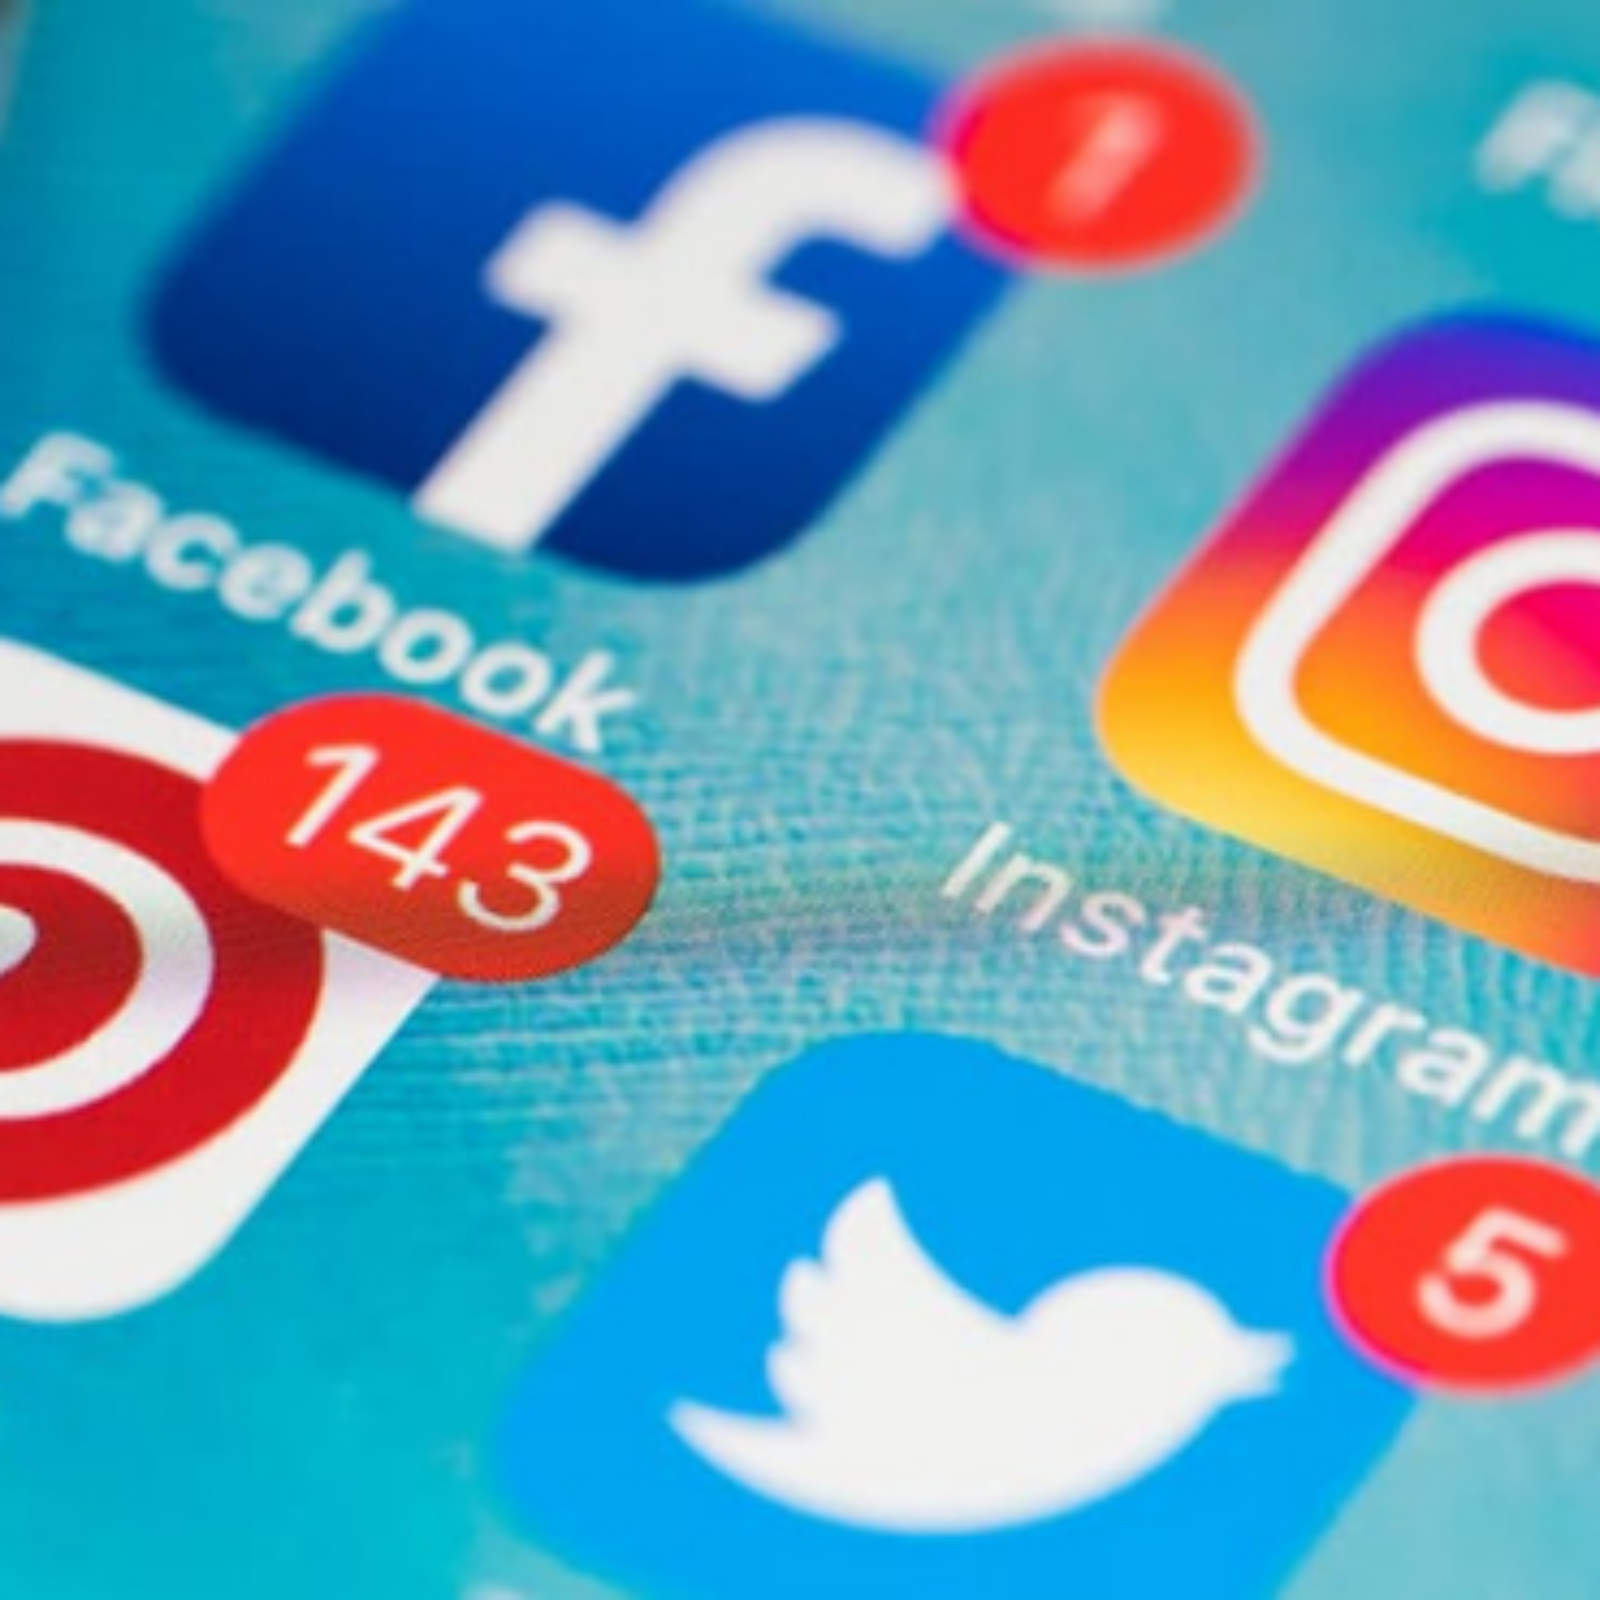 Quand poster sur Instagram, Facebook, Twitter, LinkedIn et Pinterest ?